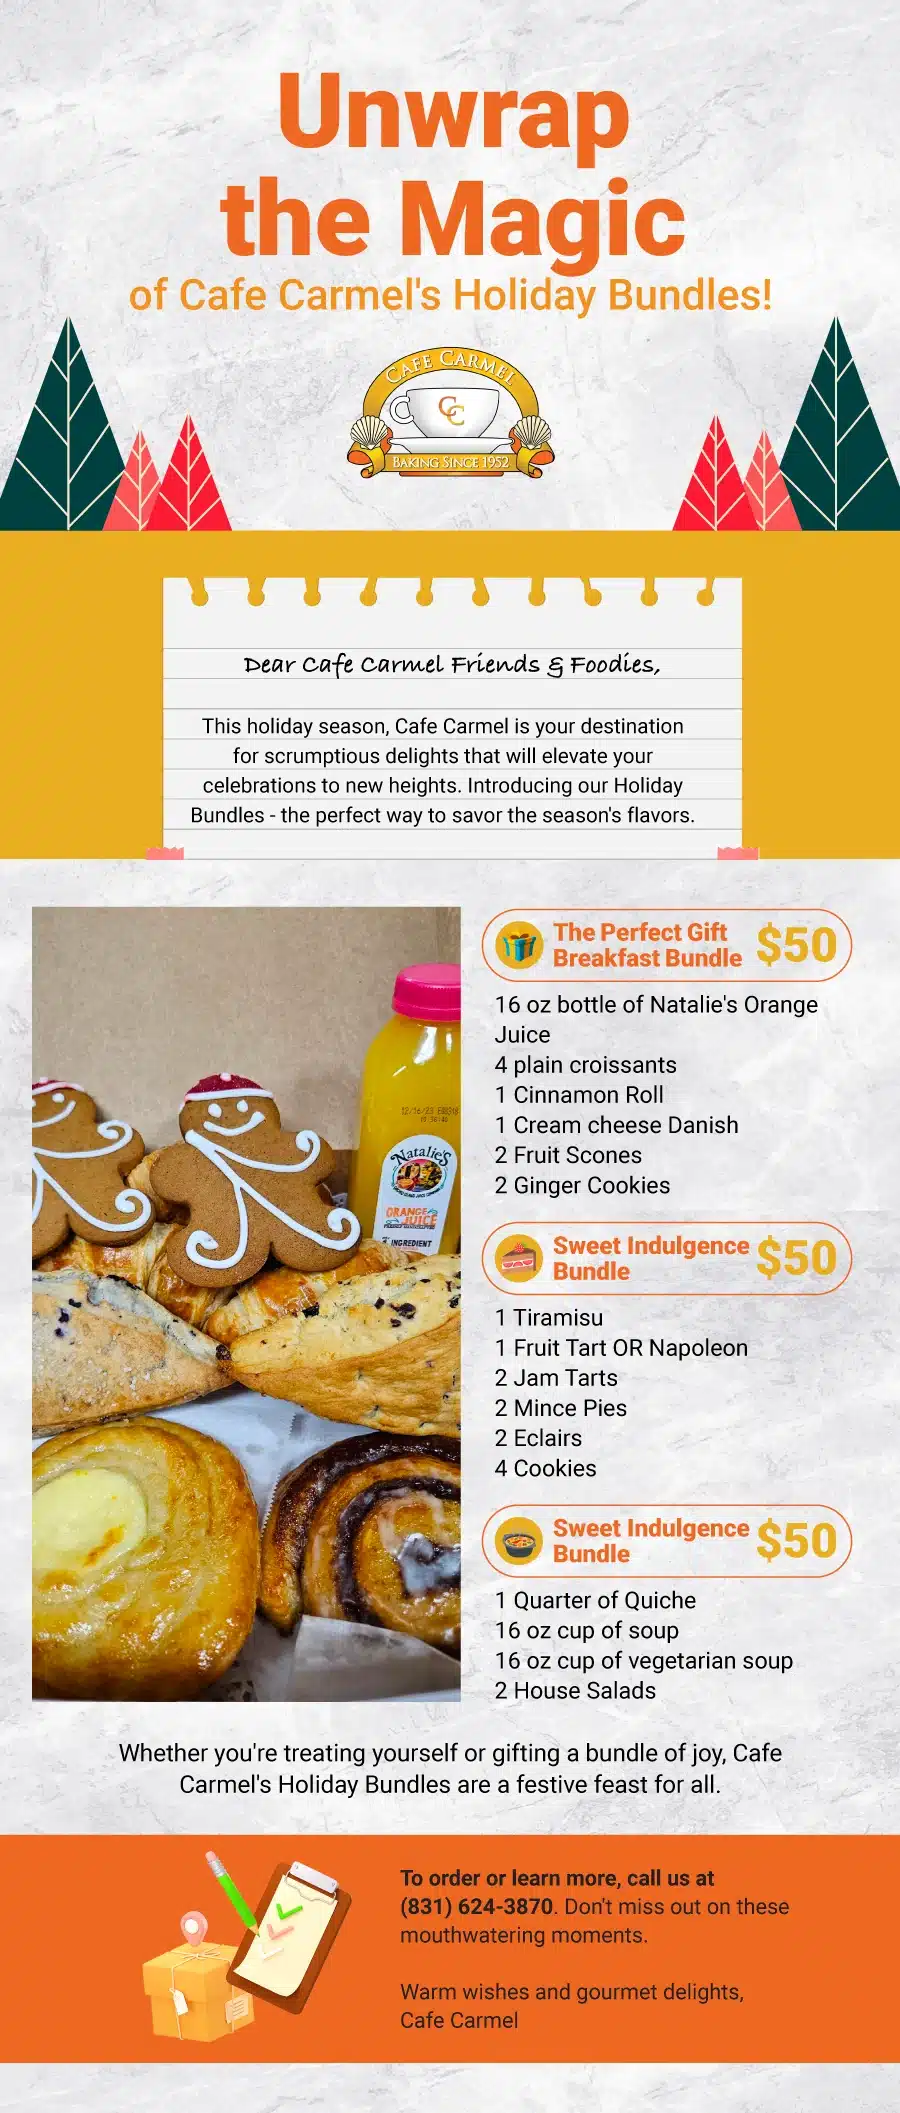 Unwrap the Magic of Cafe Carmel's Holiday Bundles! Blog